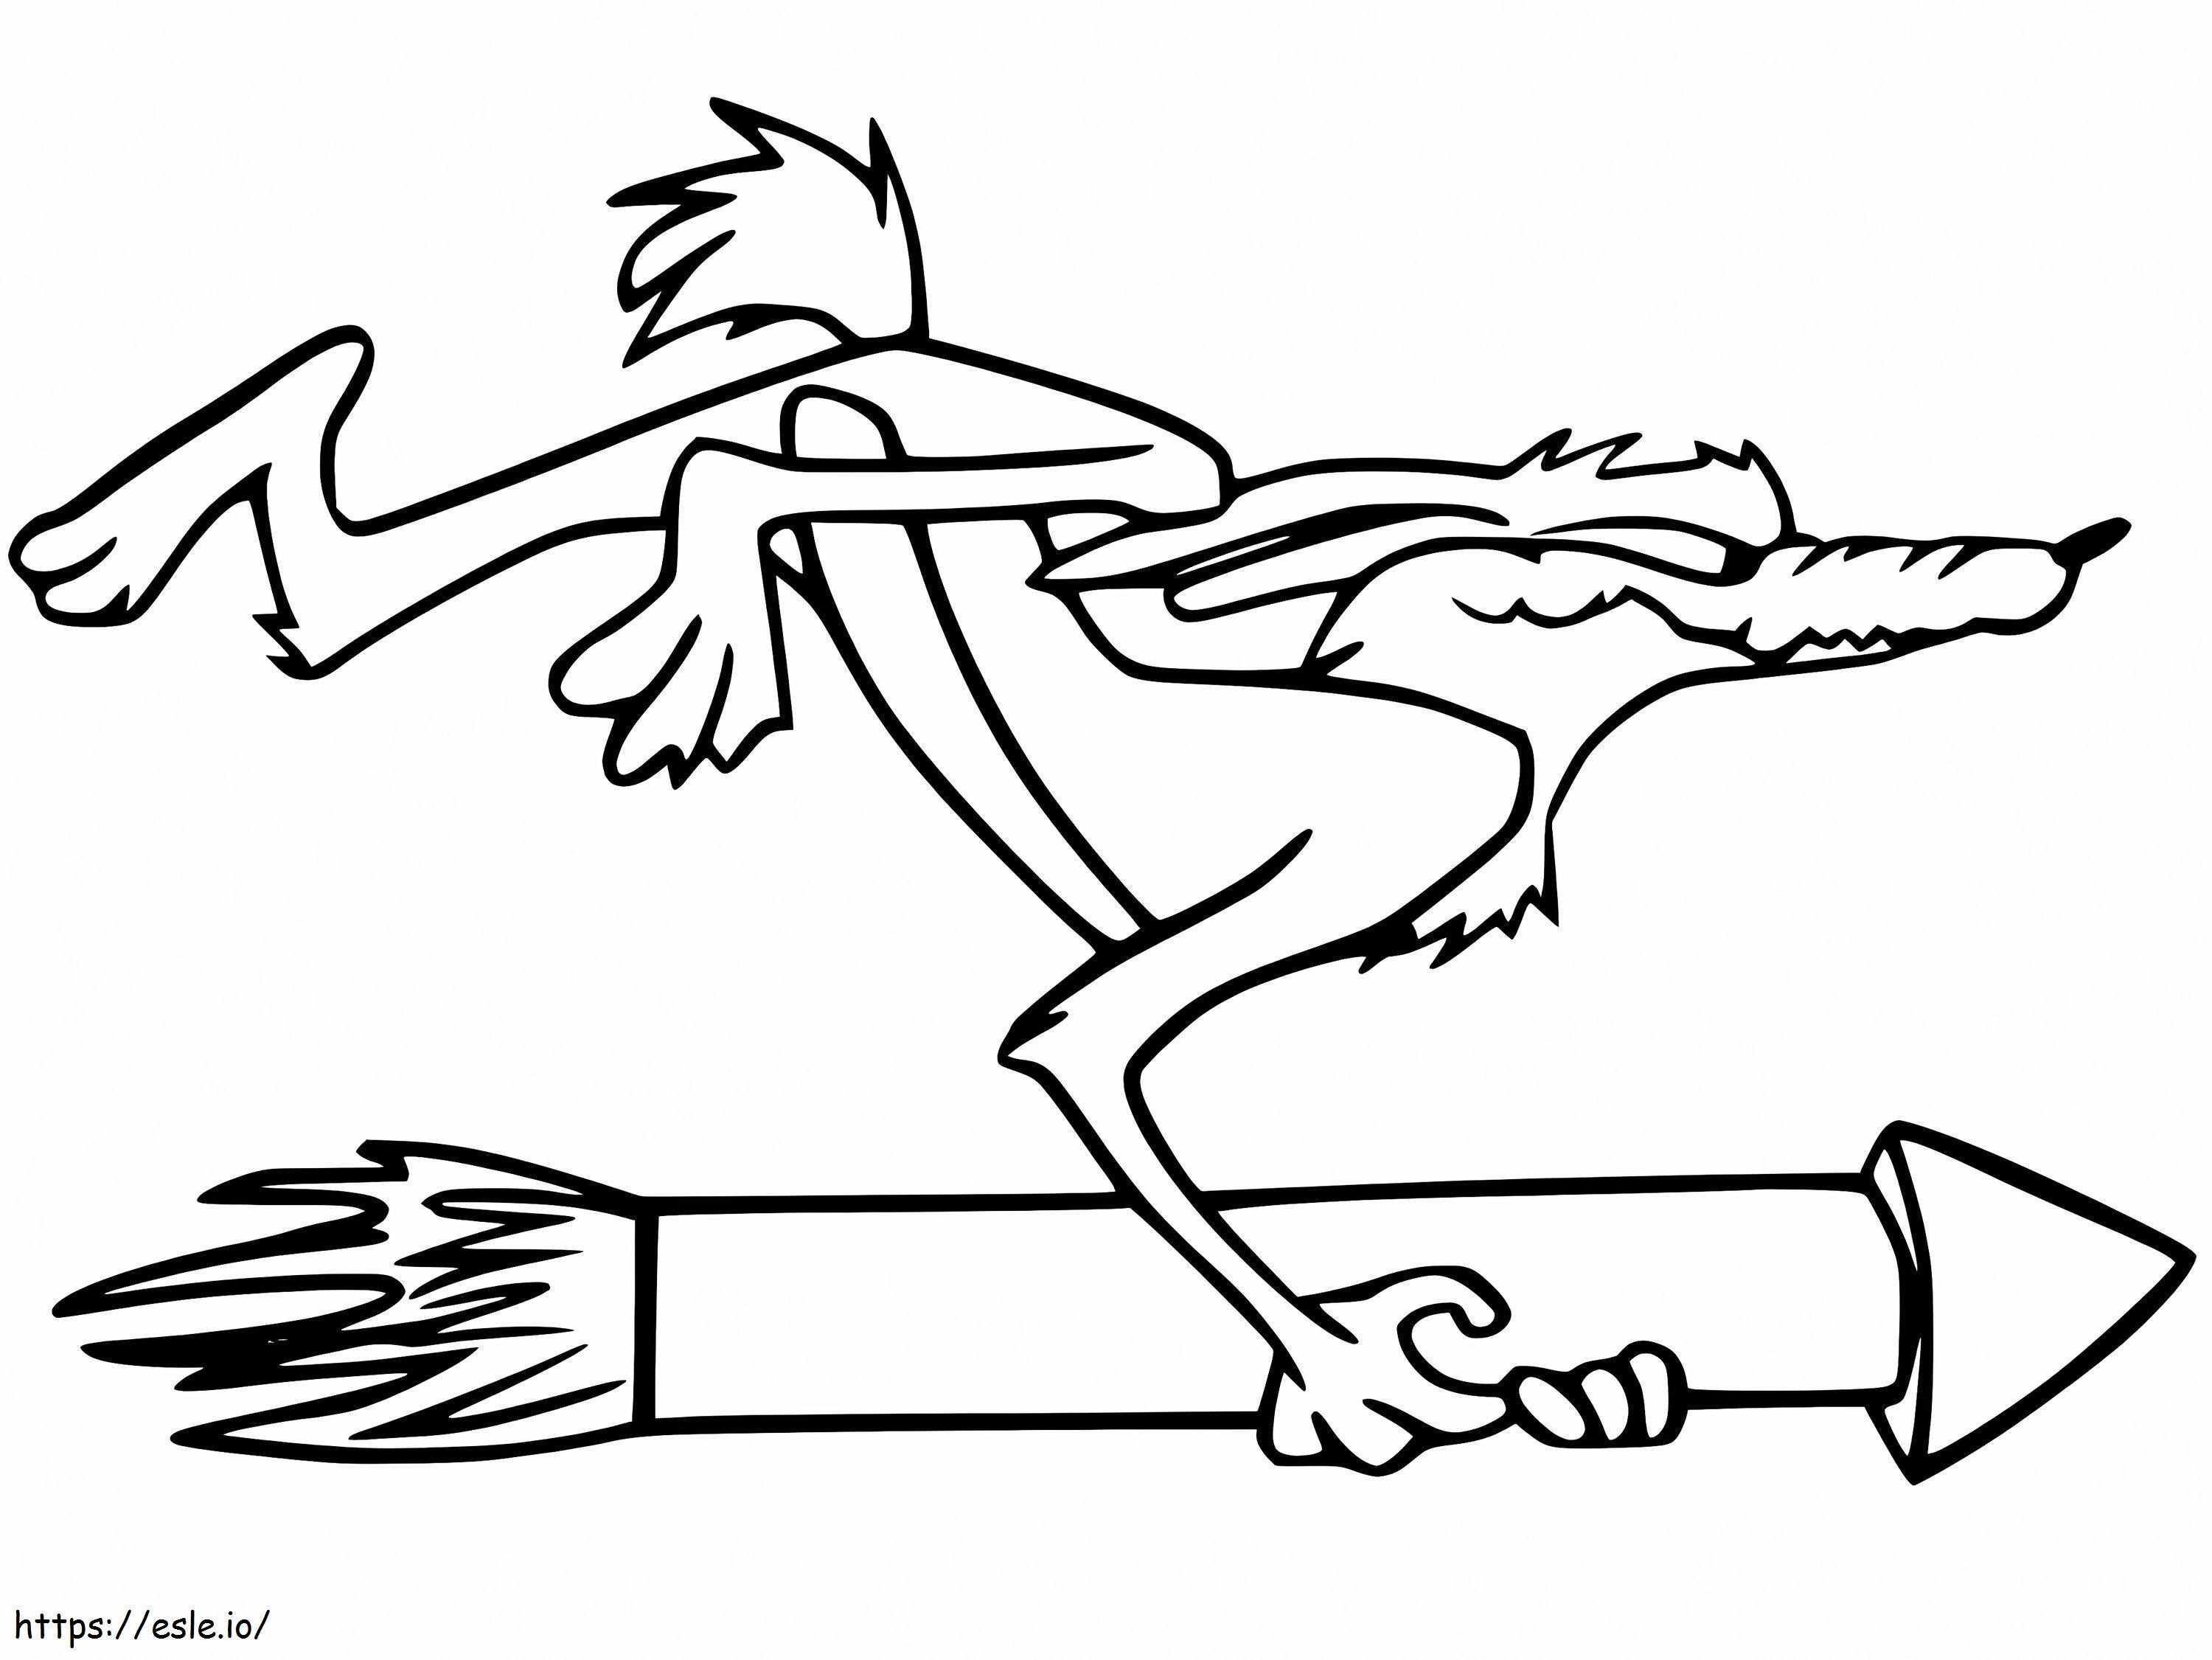 Wile E Coyote rakétával kifestő